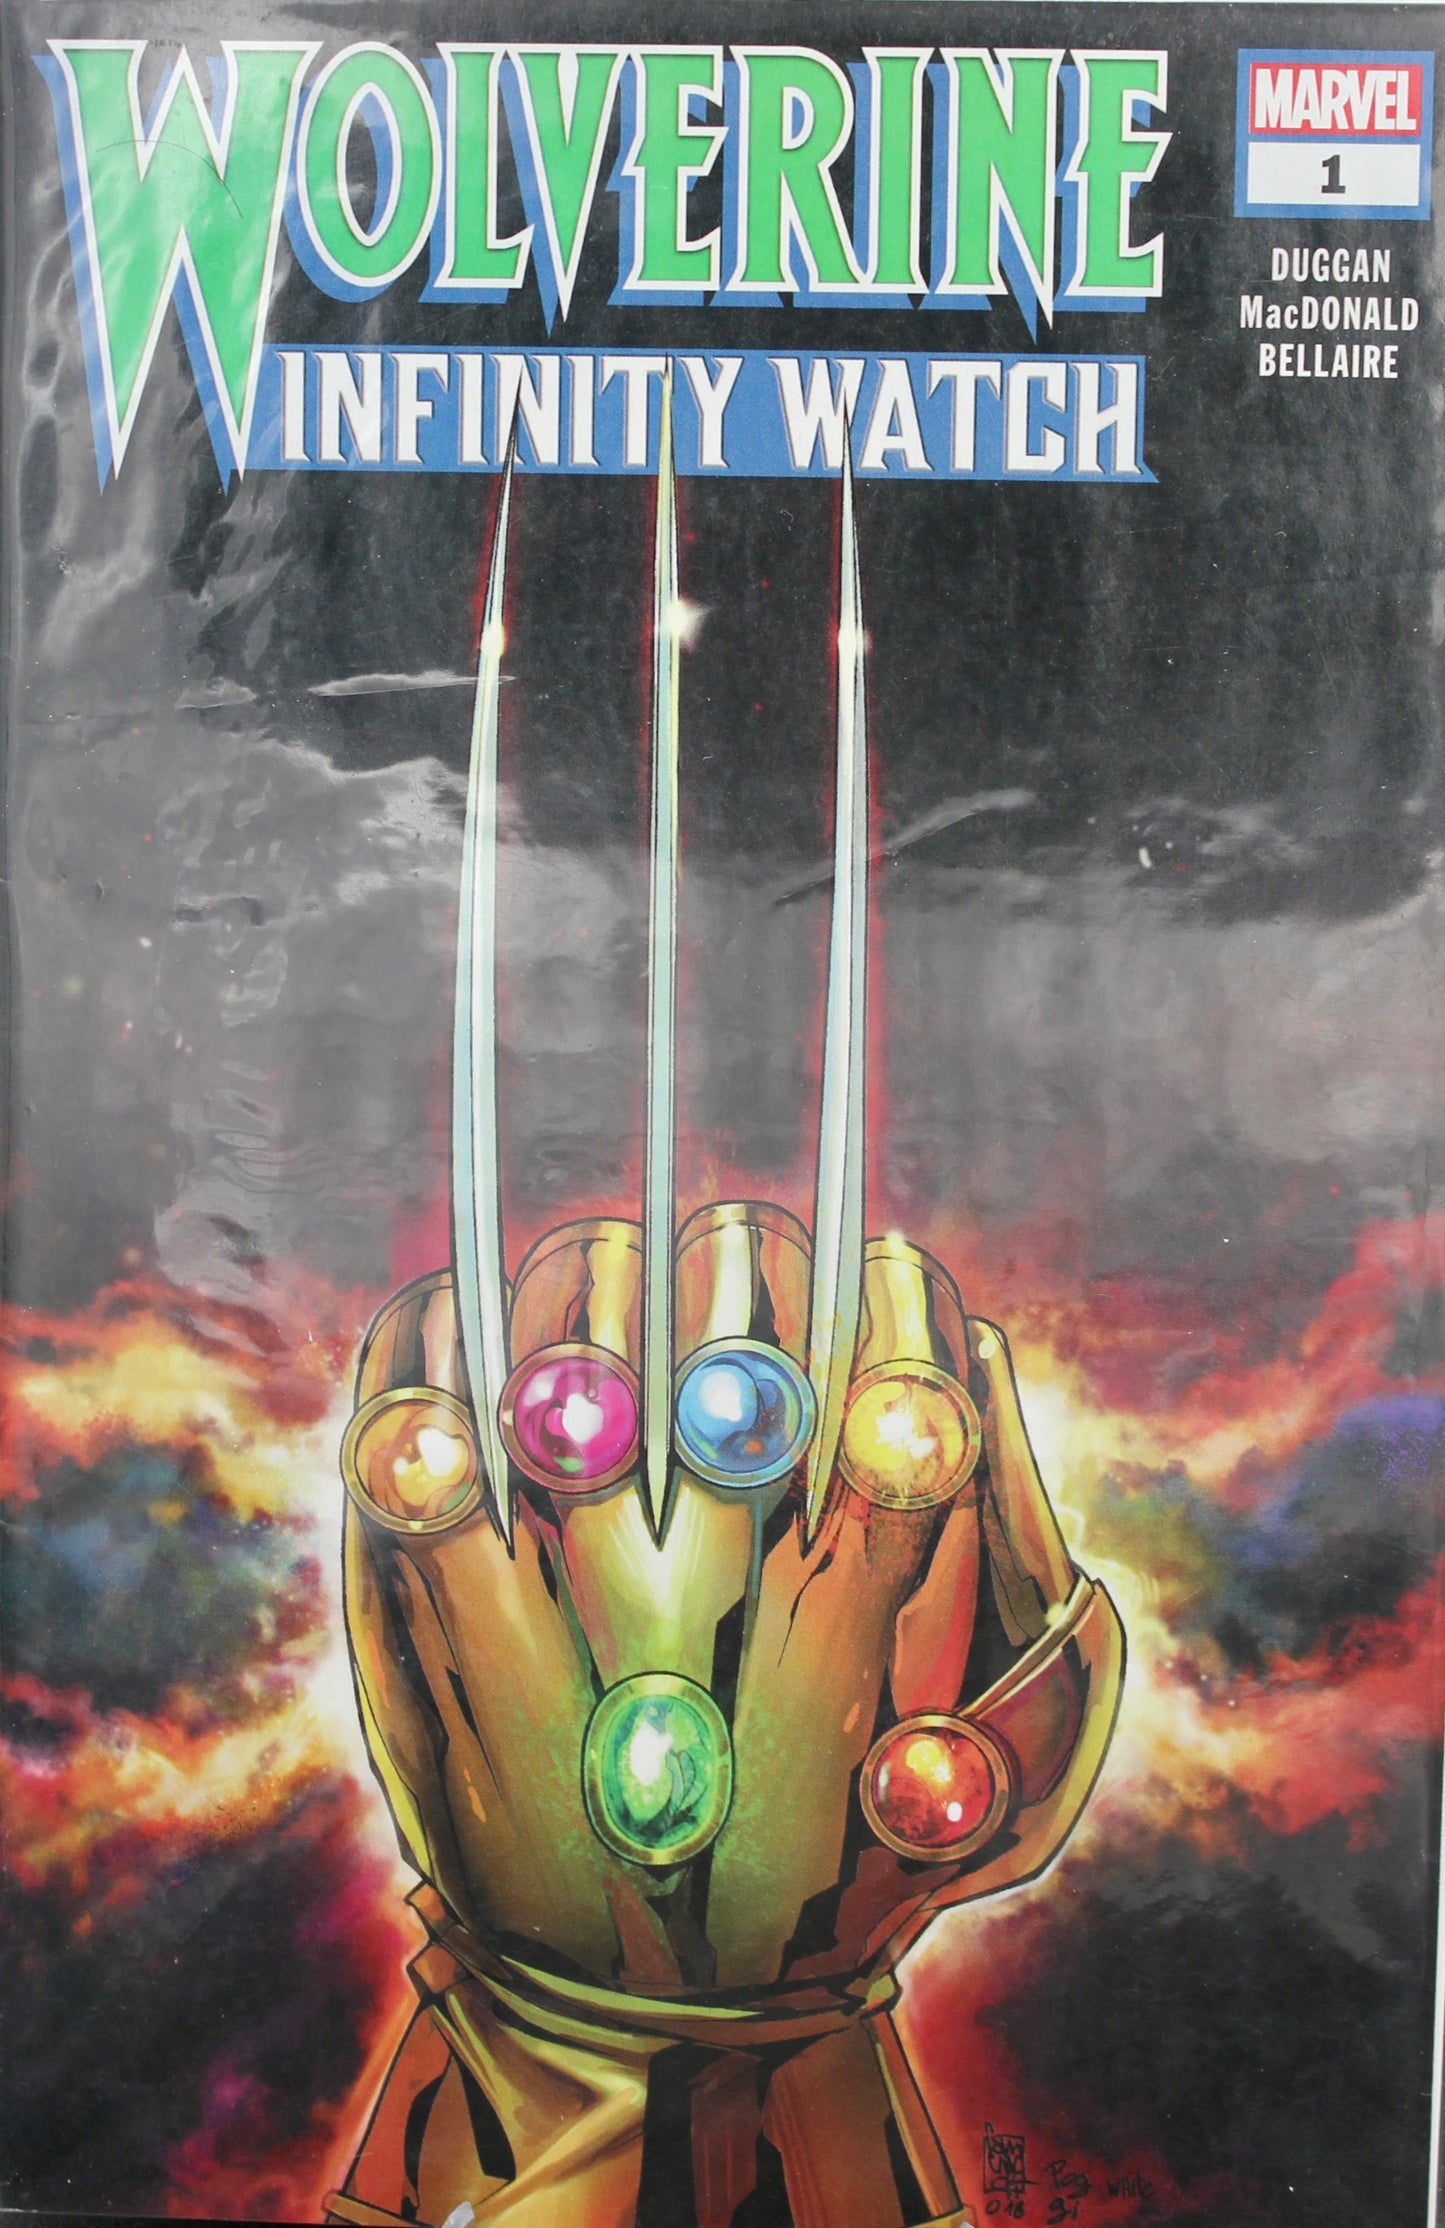 Wolverine Infinity Watch #1